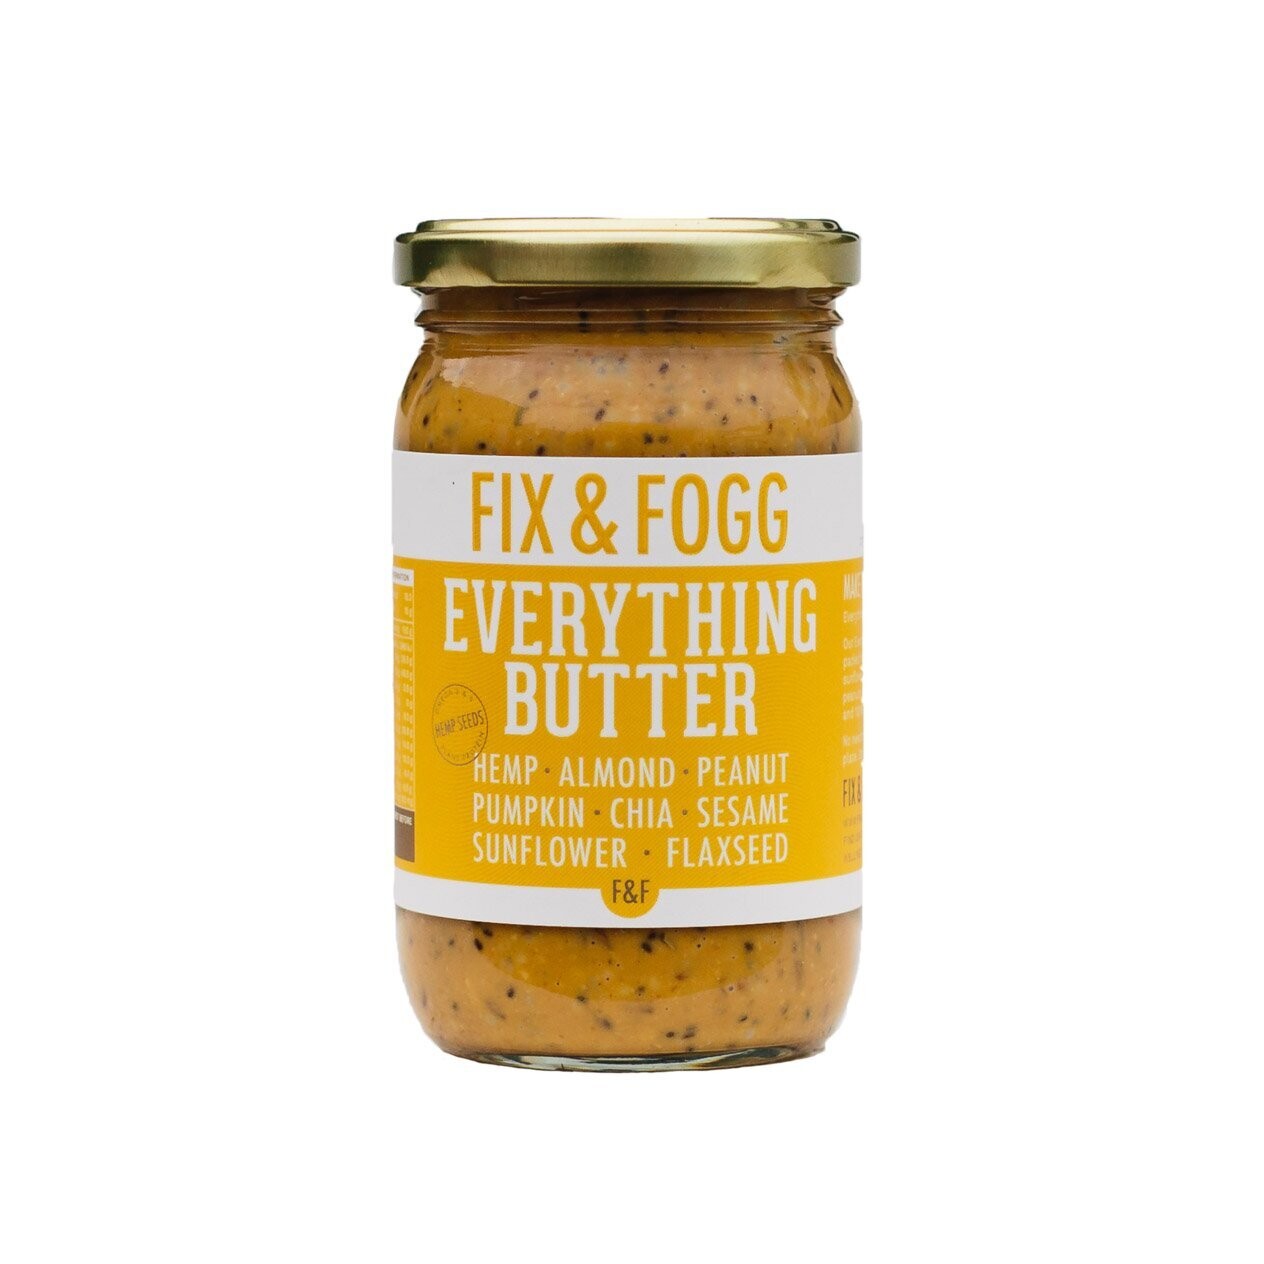 Fix & Fogg Everything Butter - Hemp, Almond, Peanut, CHia, Sesame, Sunflower, Flaxseed